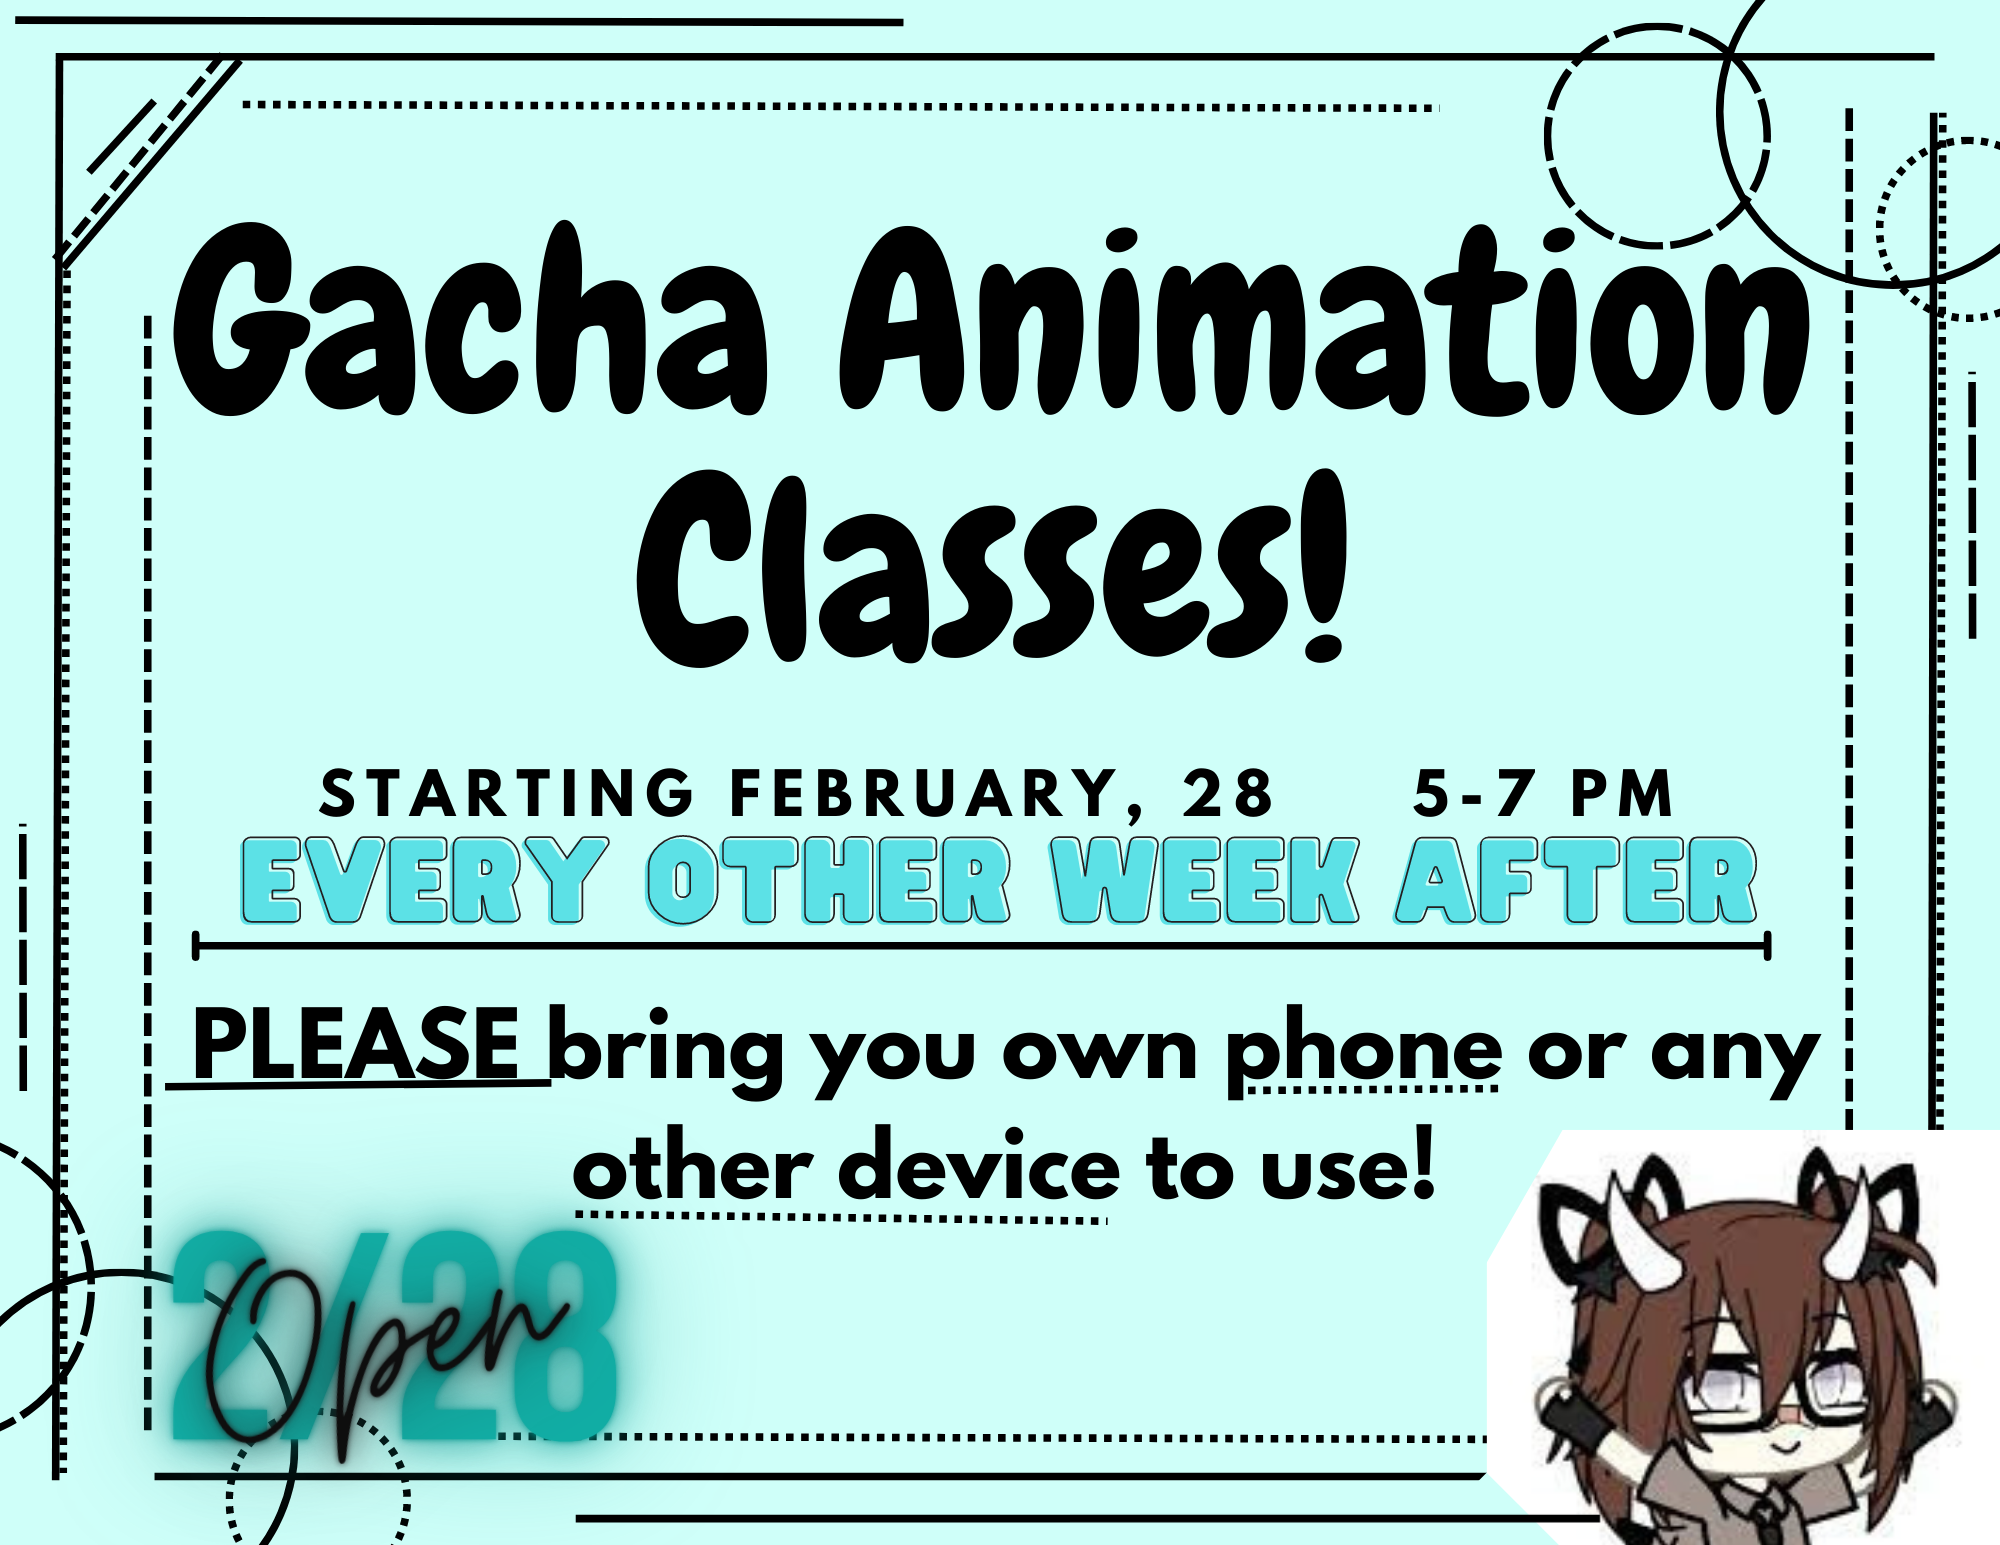 Gacha Animation classes